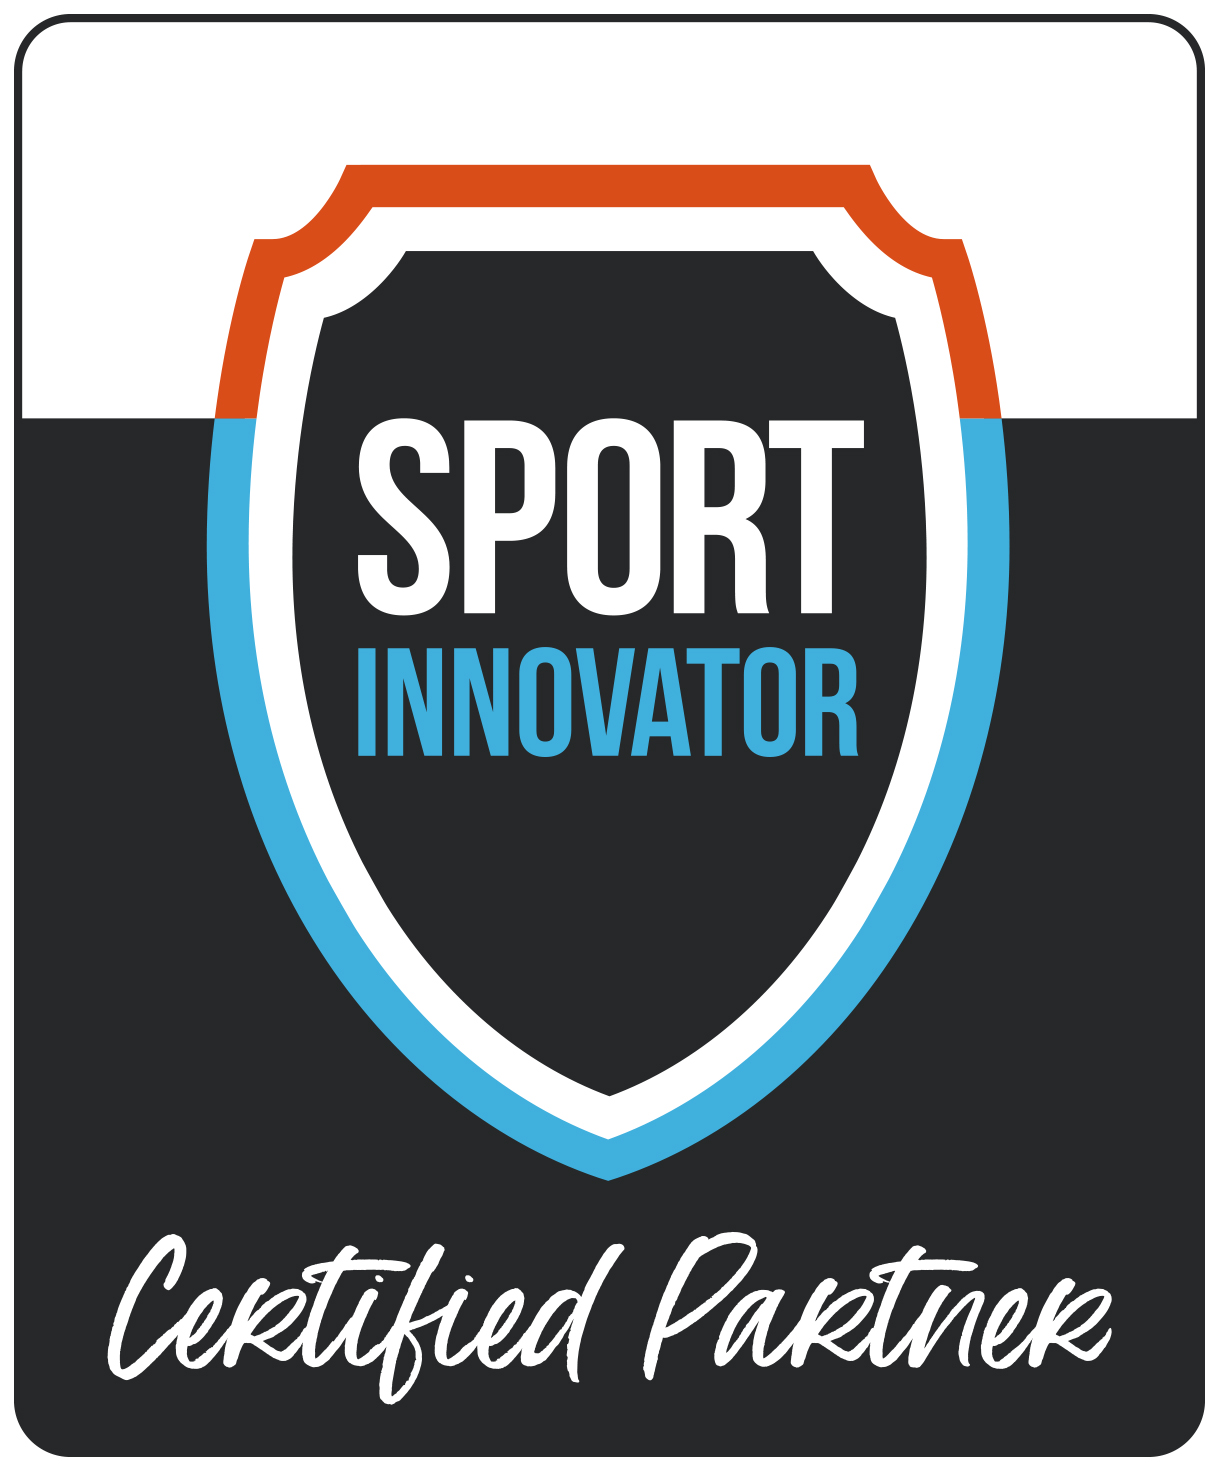 Sport innovator certified partner